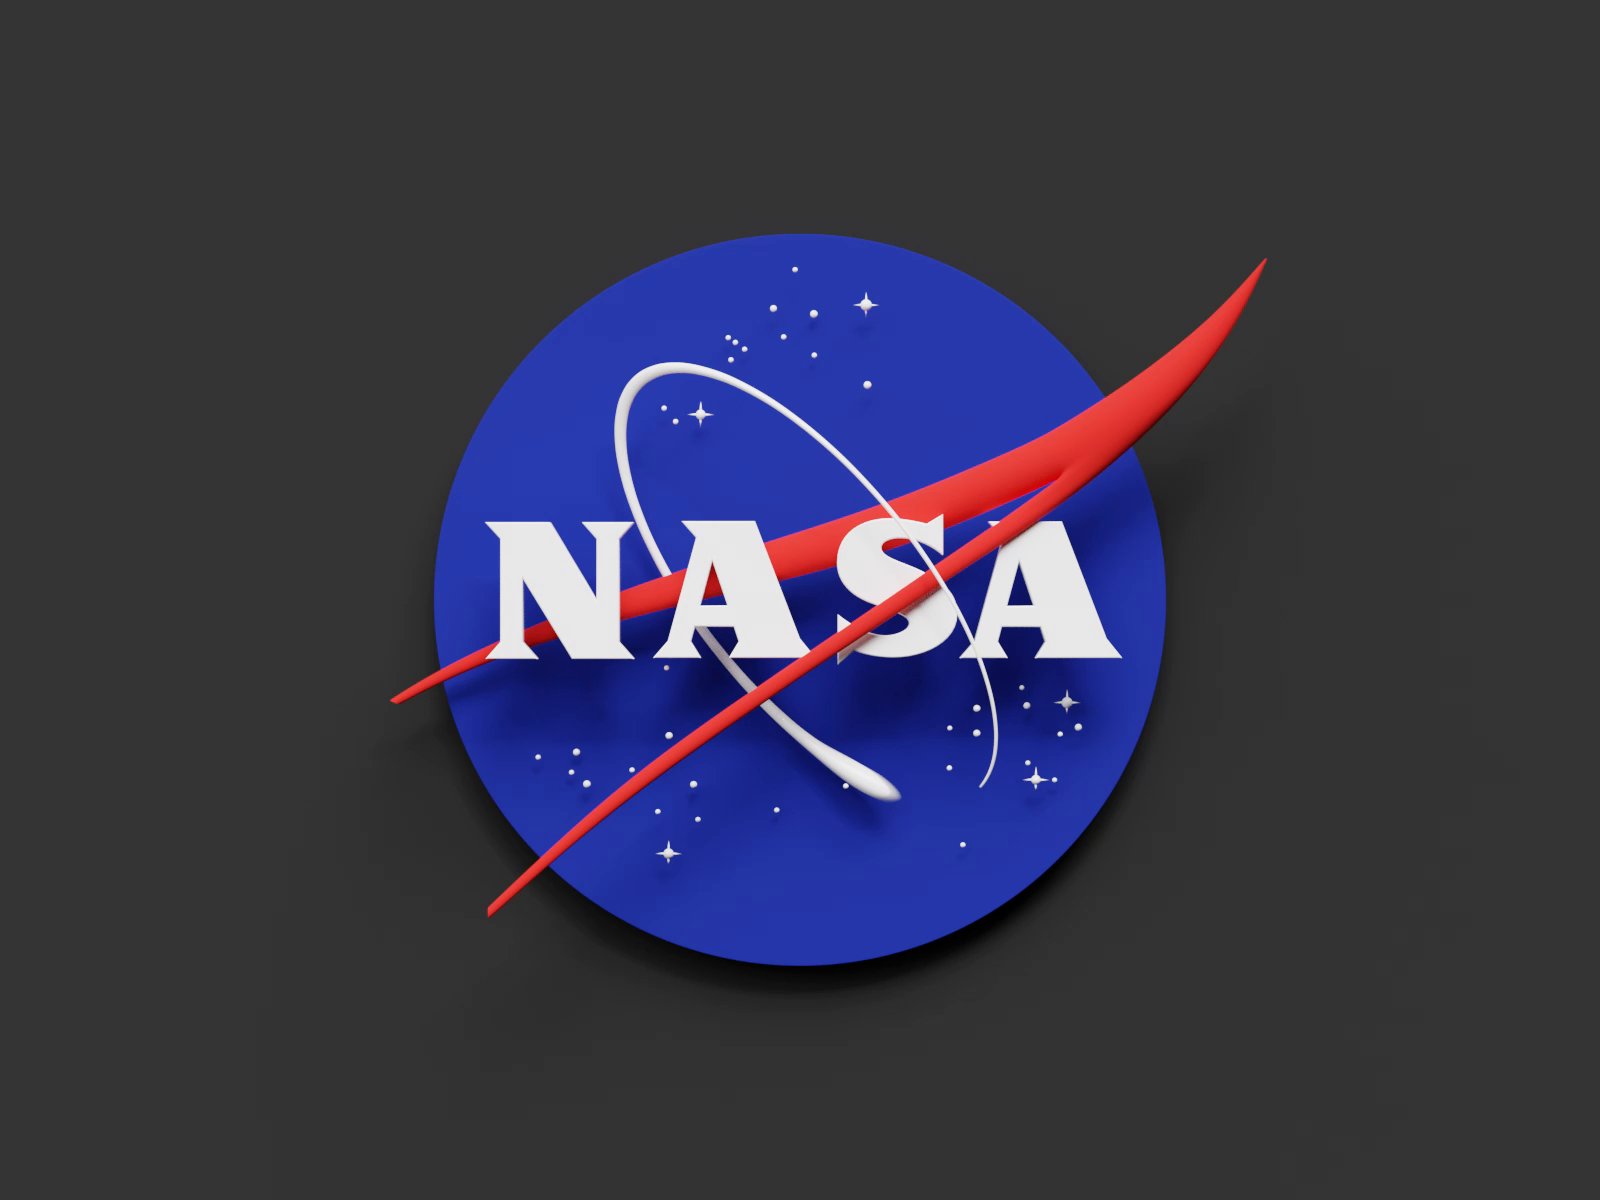 Nasa logo 3D makeover by Adam Skovran on Dribbble